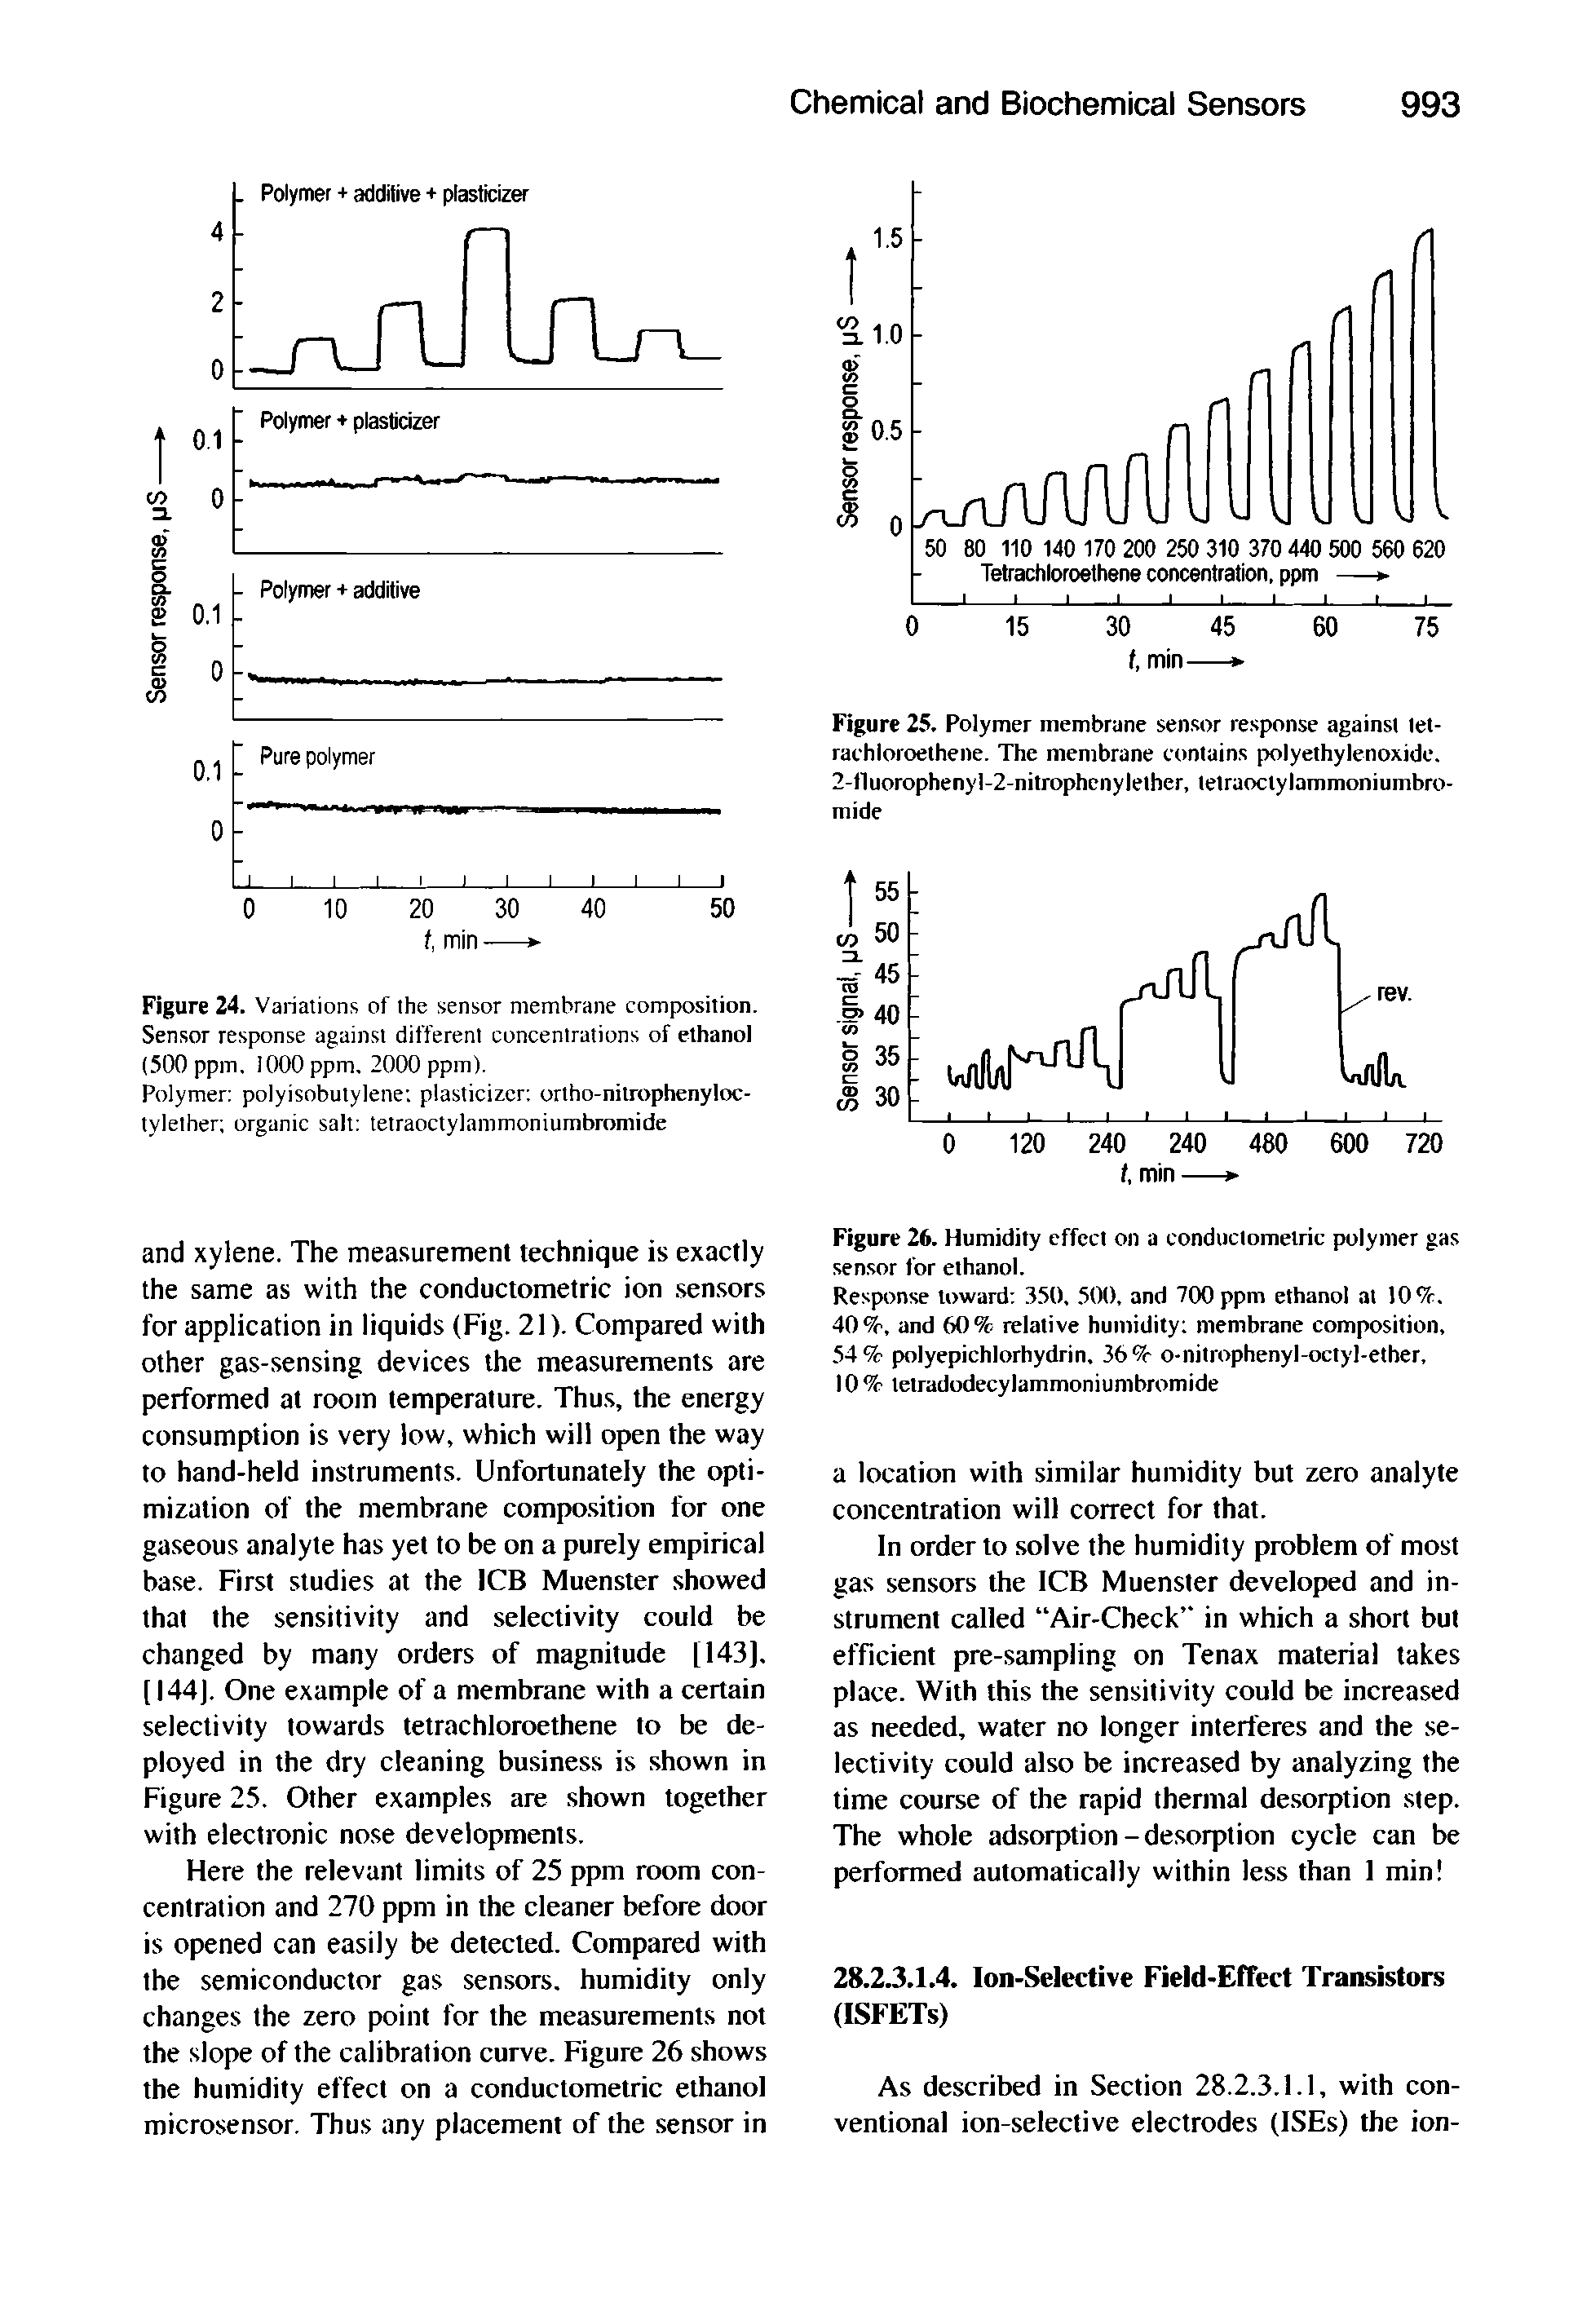 Figure 26. Humidity effect on a conduclomeiric polymer gas sensor for ethanol.